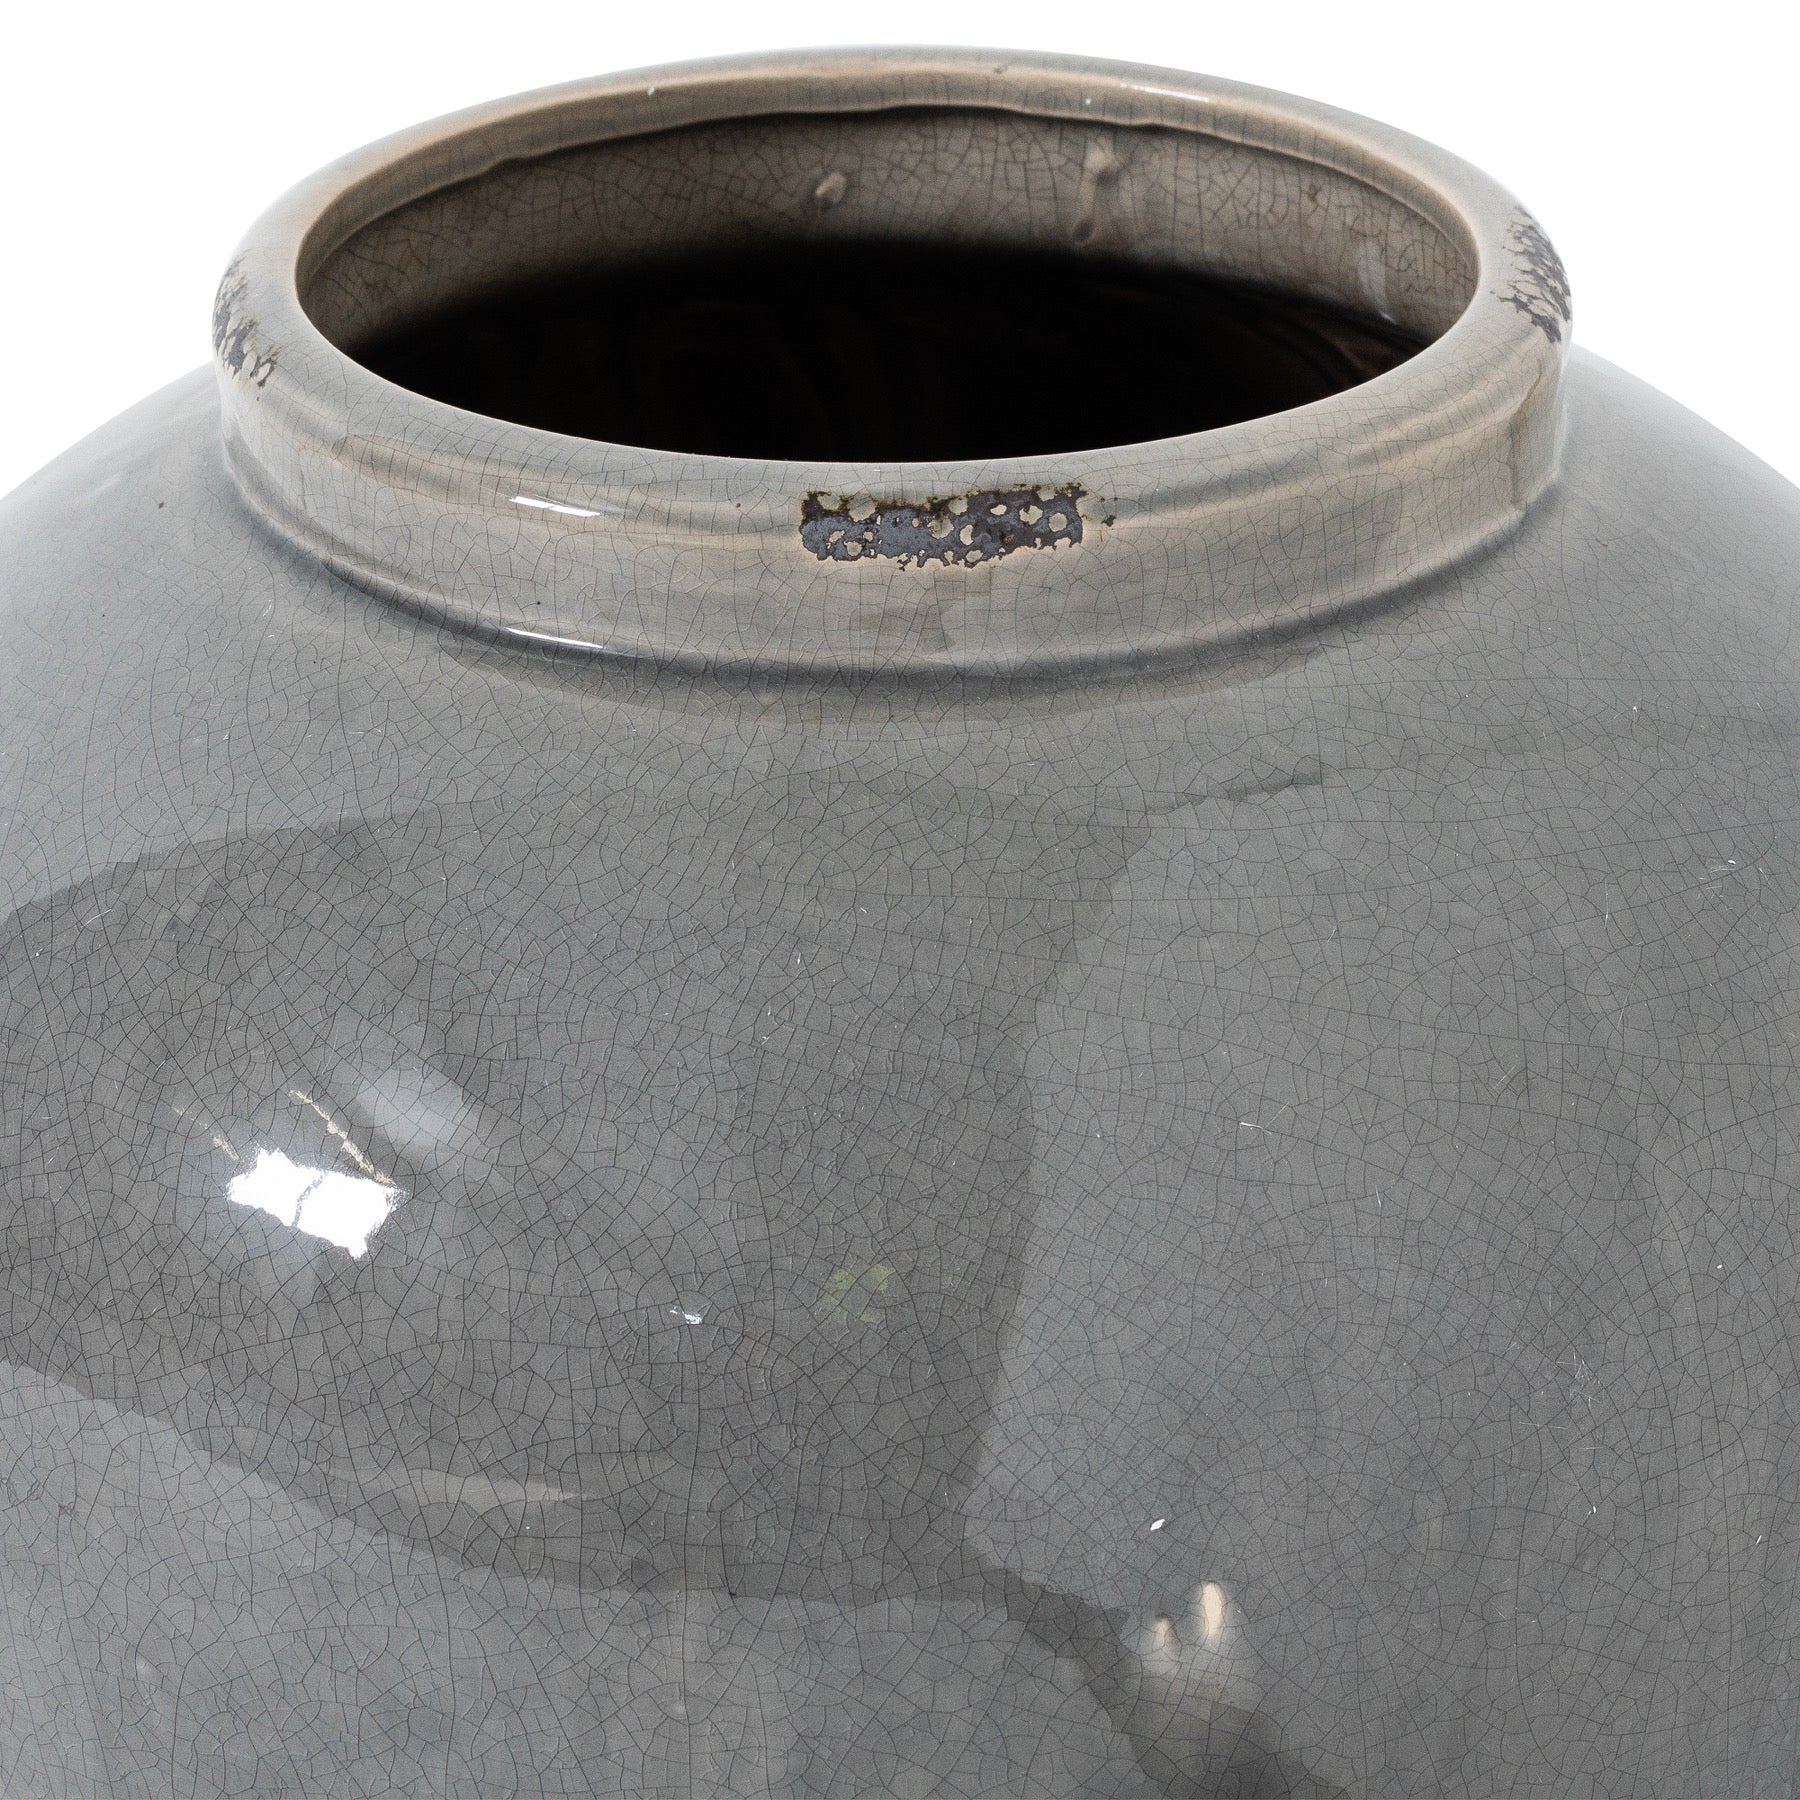 Garda Grey Glazed Juniper Vase